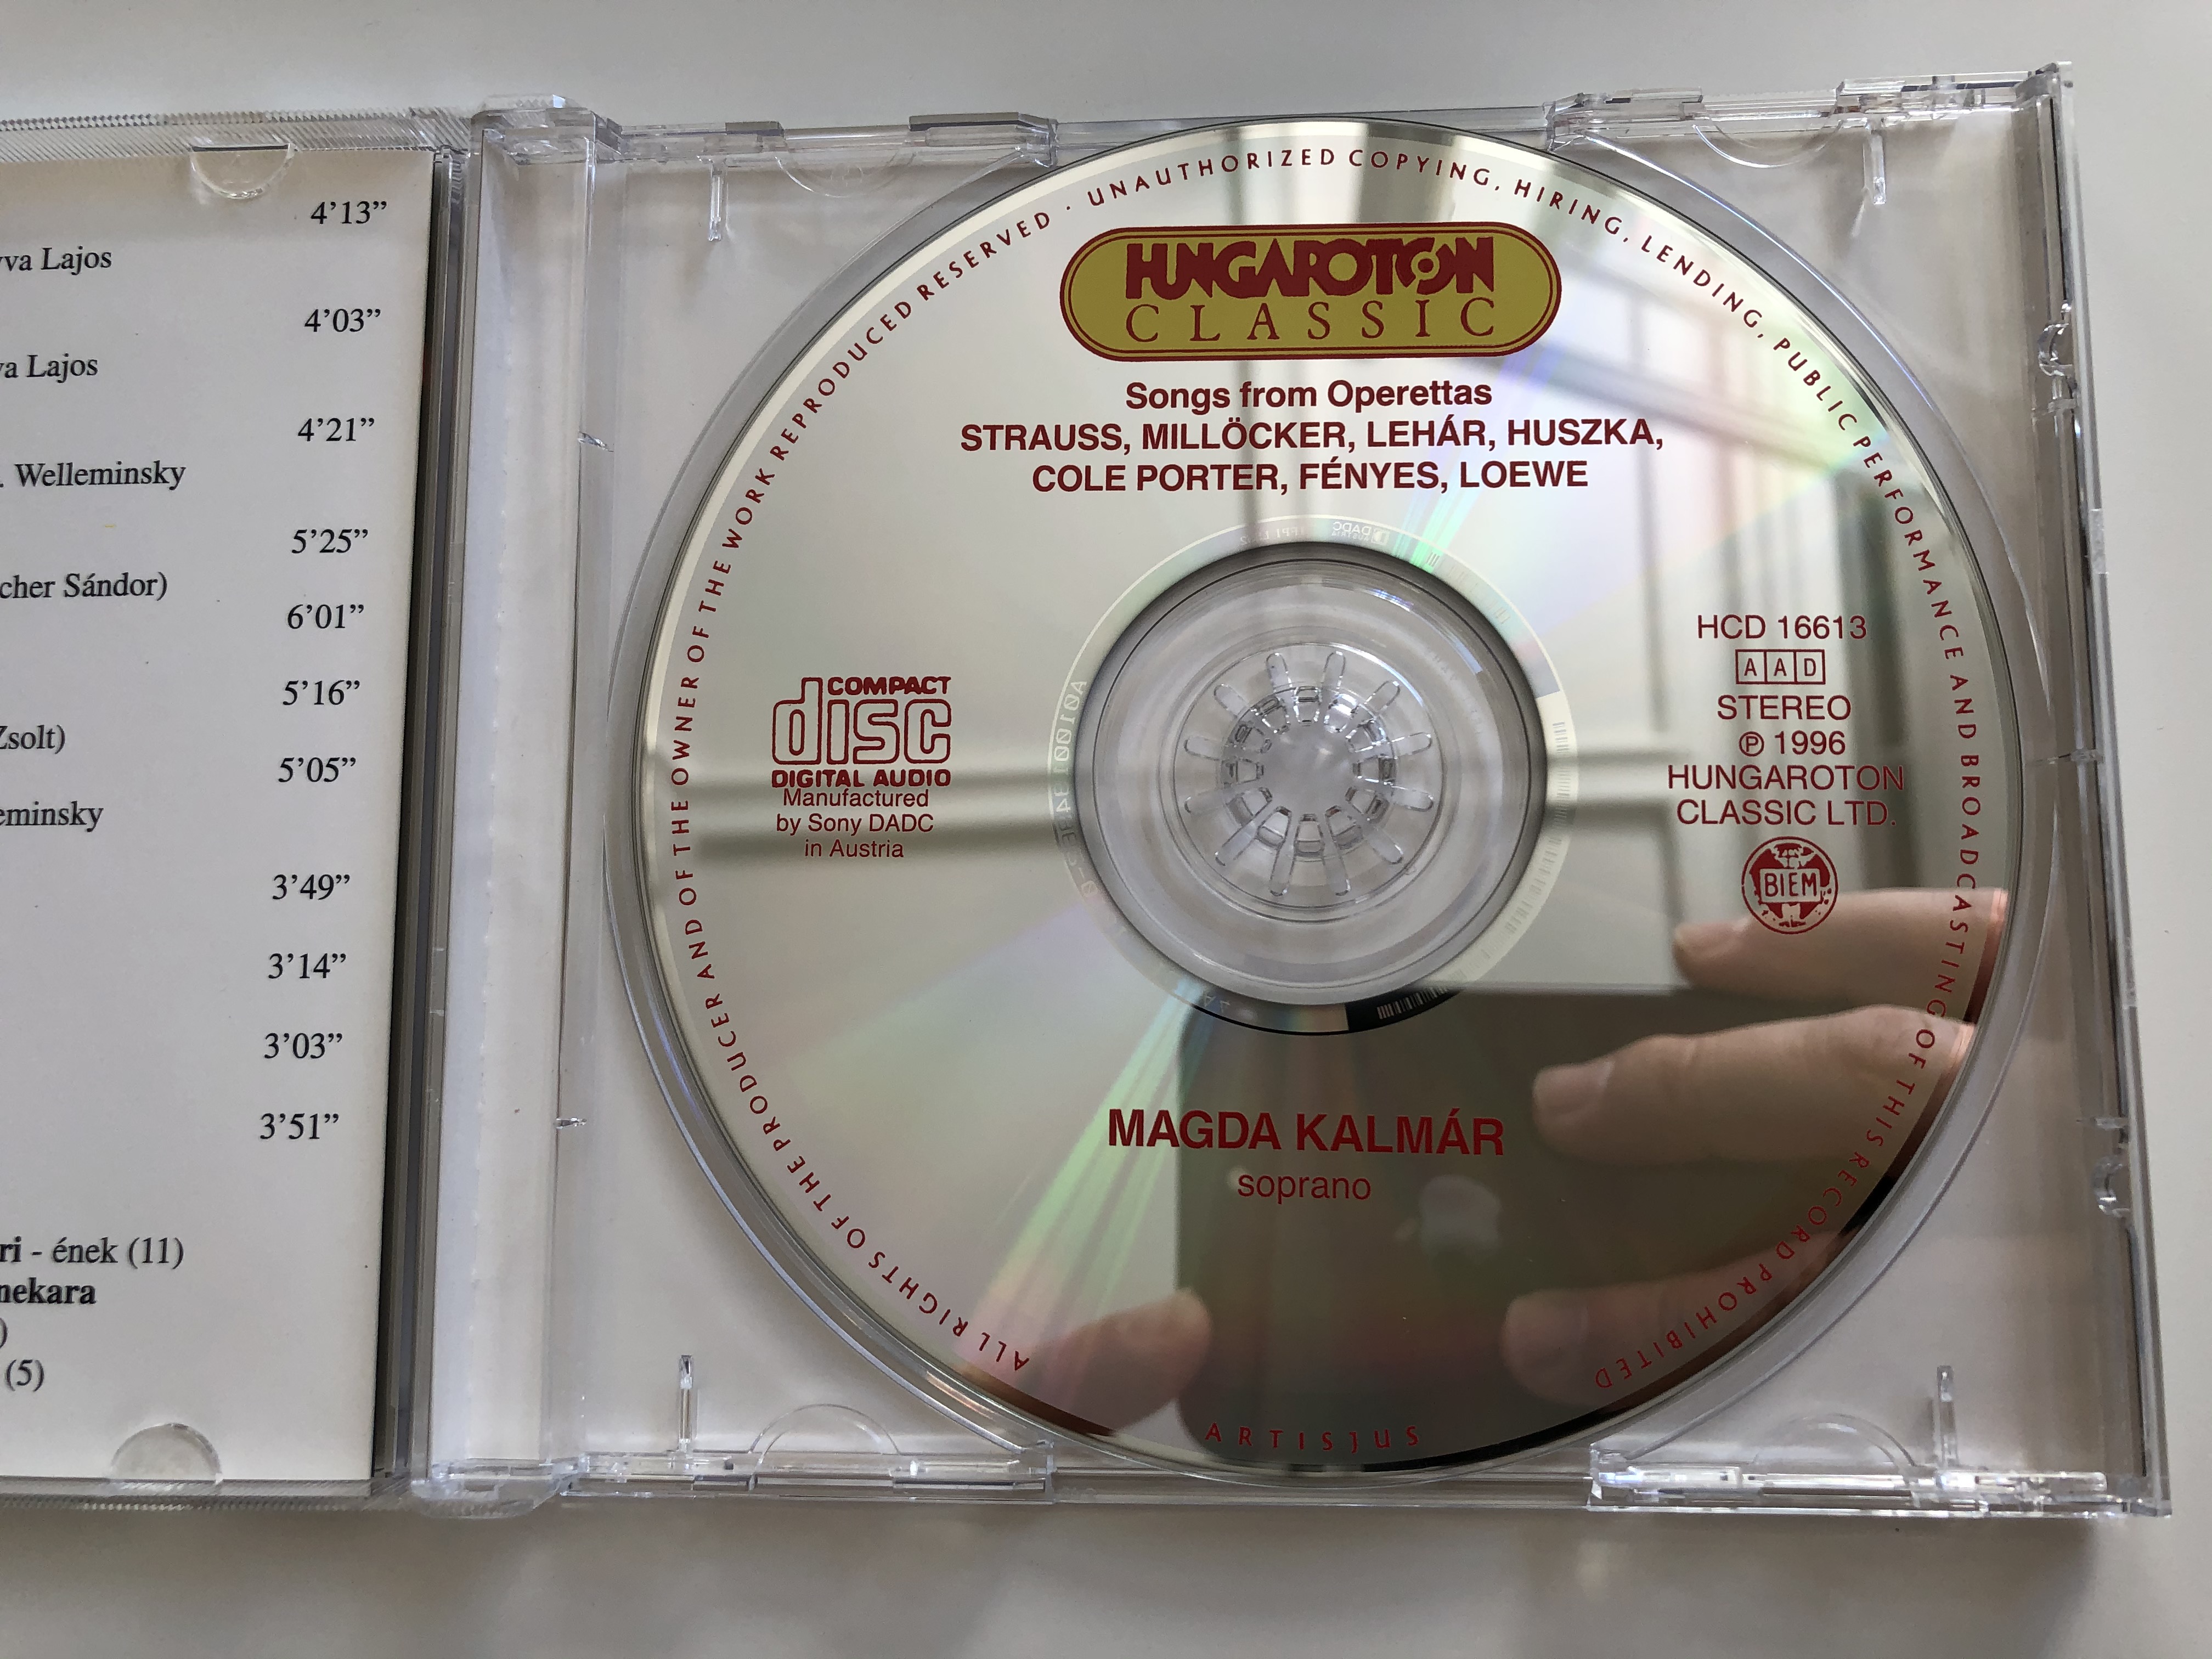 csoda-kell...-make-wonder...-magda-kalm-r-operettdalok-song-from-operettas-strauss-mill-cker-leh-r-huszka-cole-porter-f-nyes-loewe-hungaroton-classic-audio-cd-1996-stereo-hcd-16613-4-.jpg